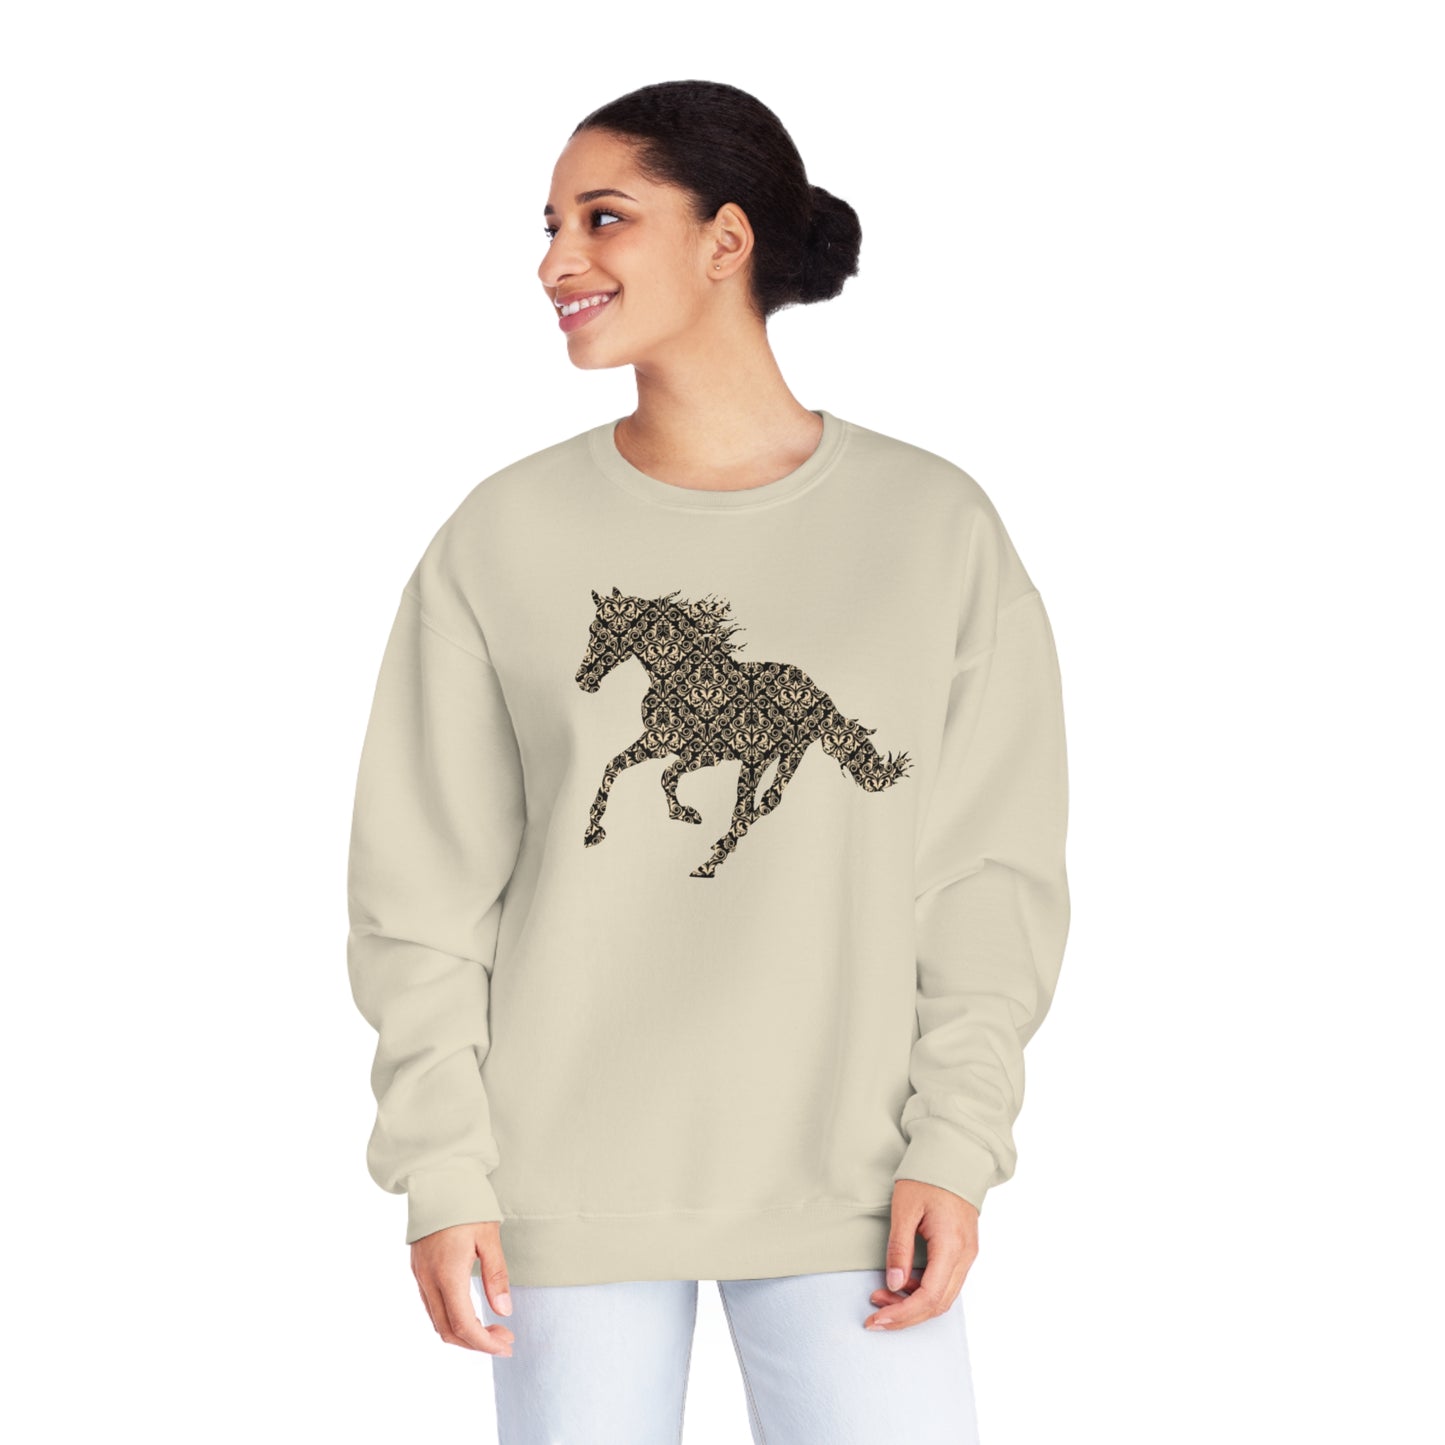 Running Horse - Crewneck Sweatshirt